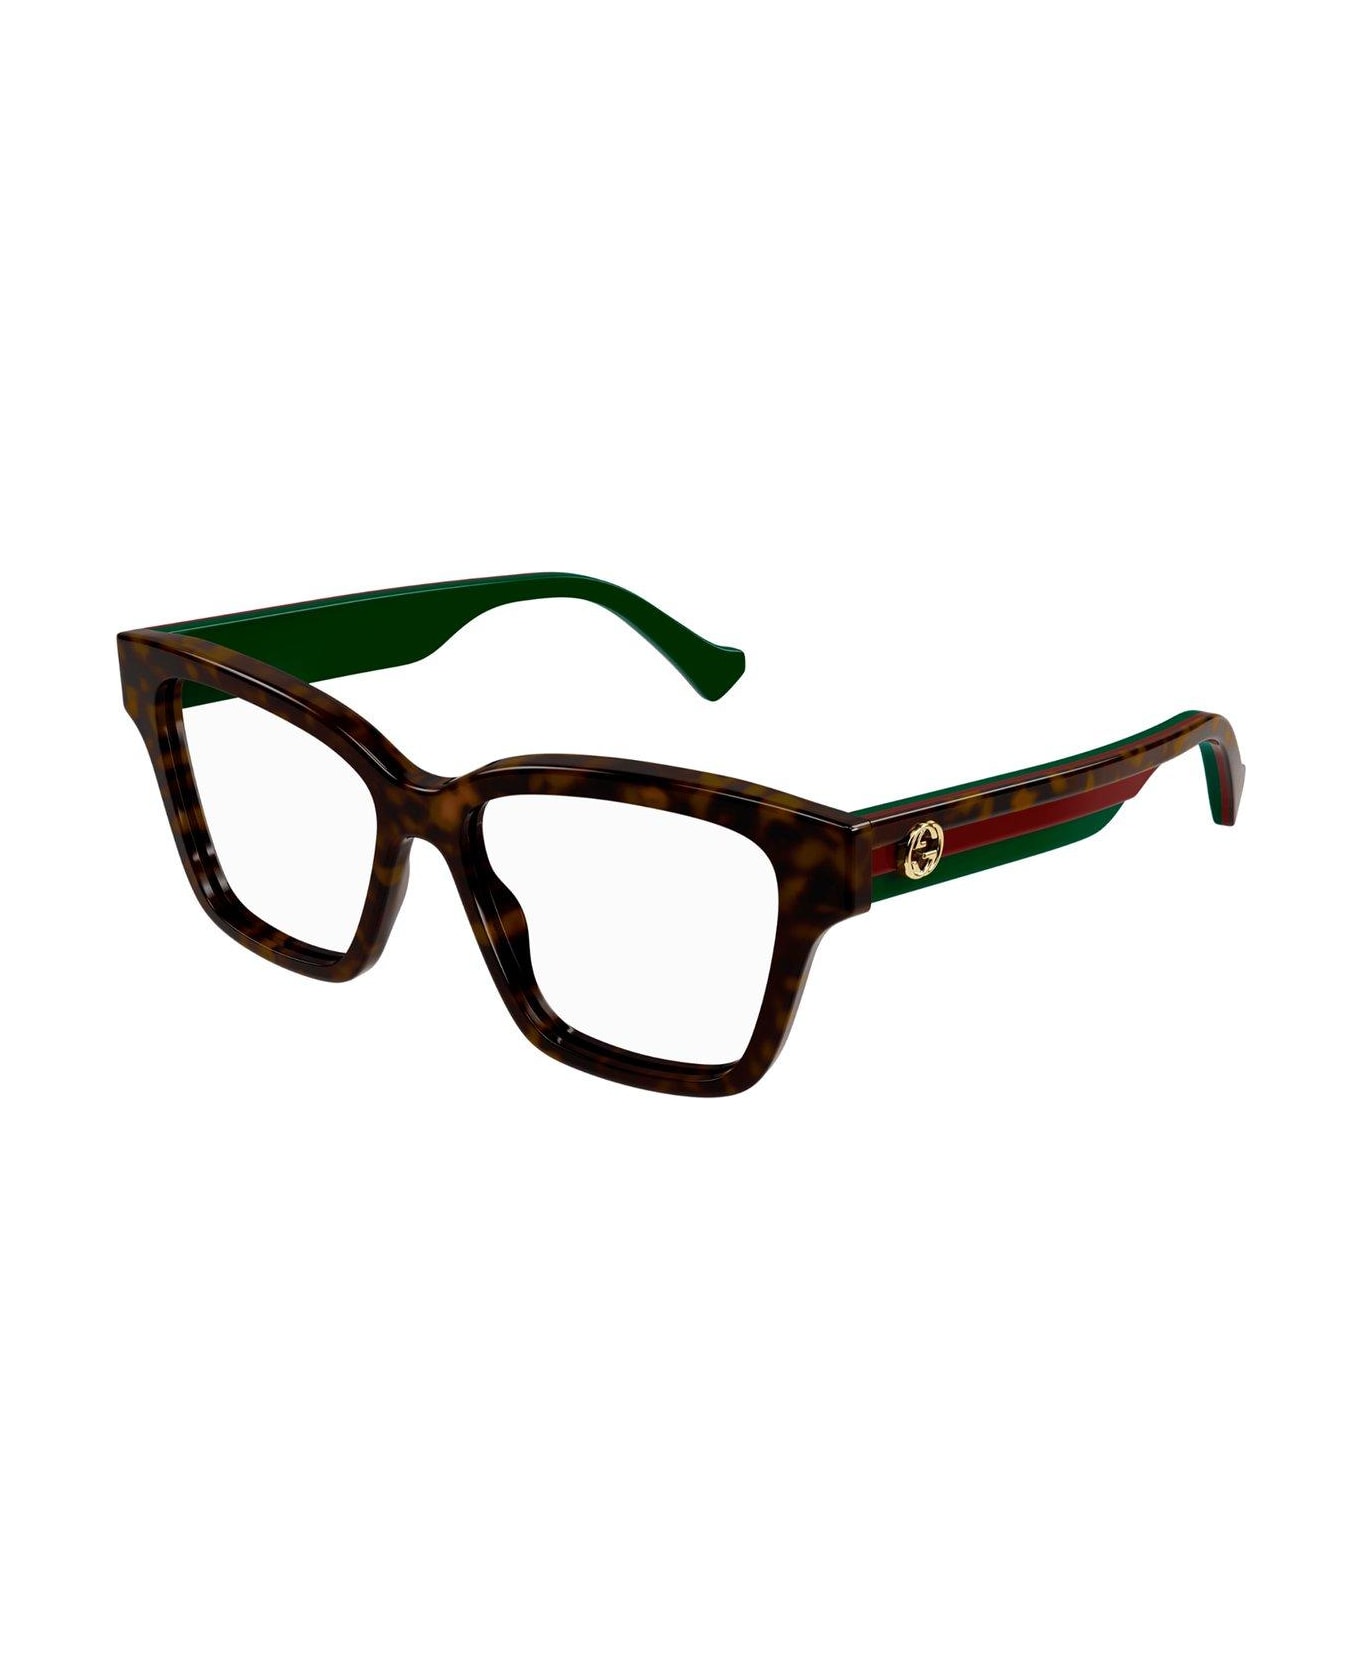 Gucci Eyewear Rectangle Frame Glasses - 006 havana havana transpa